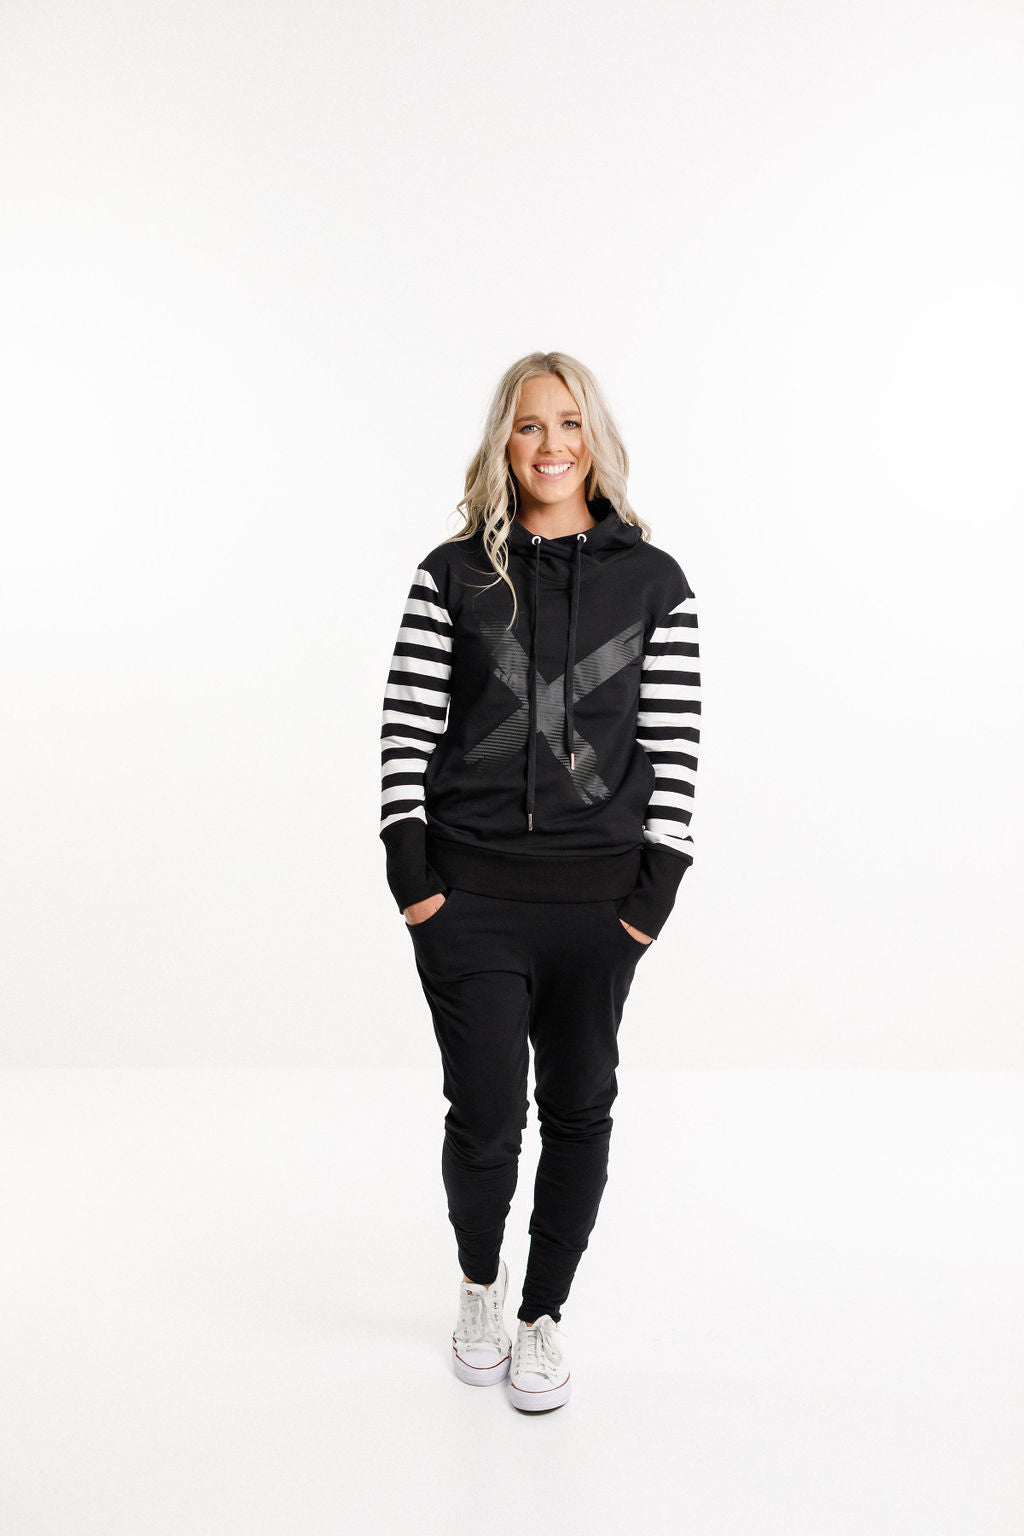 Hooded Sweatshirt - Black with Black & White stripe sleeves and X print